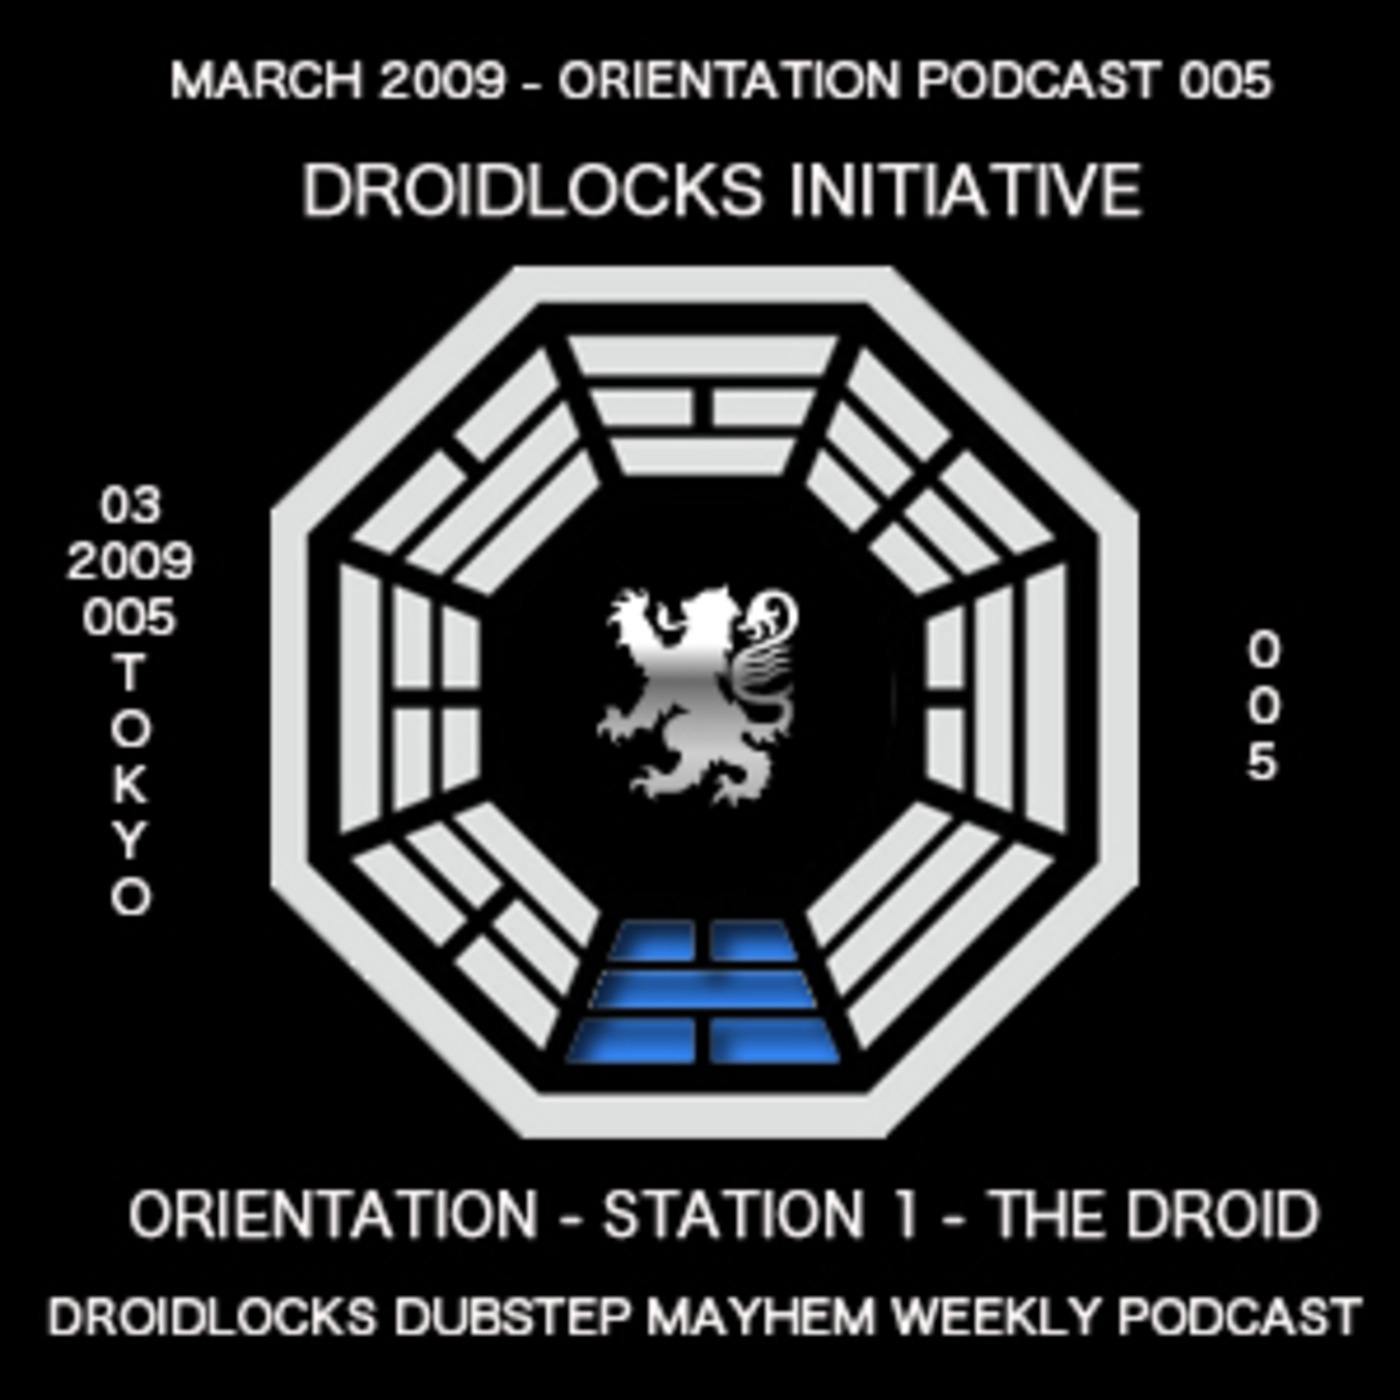 The Droidlocks Initiative Podcast